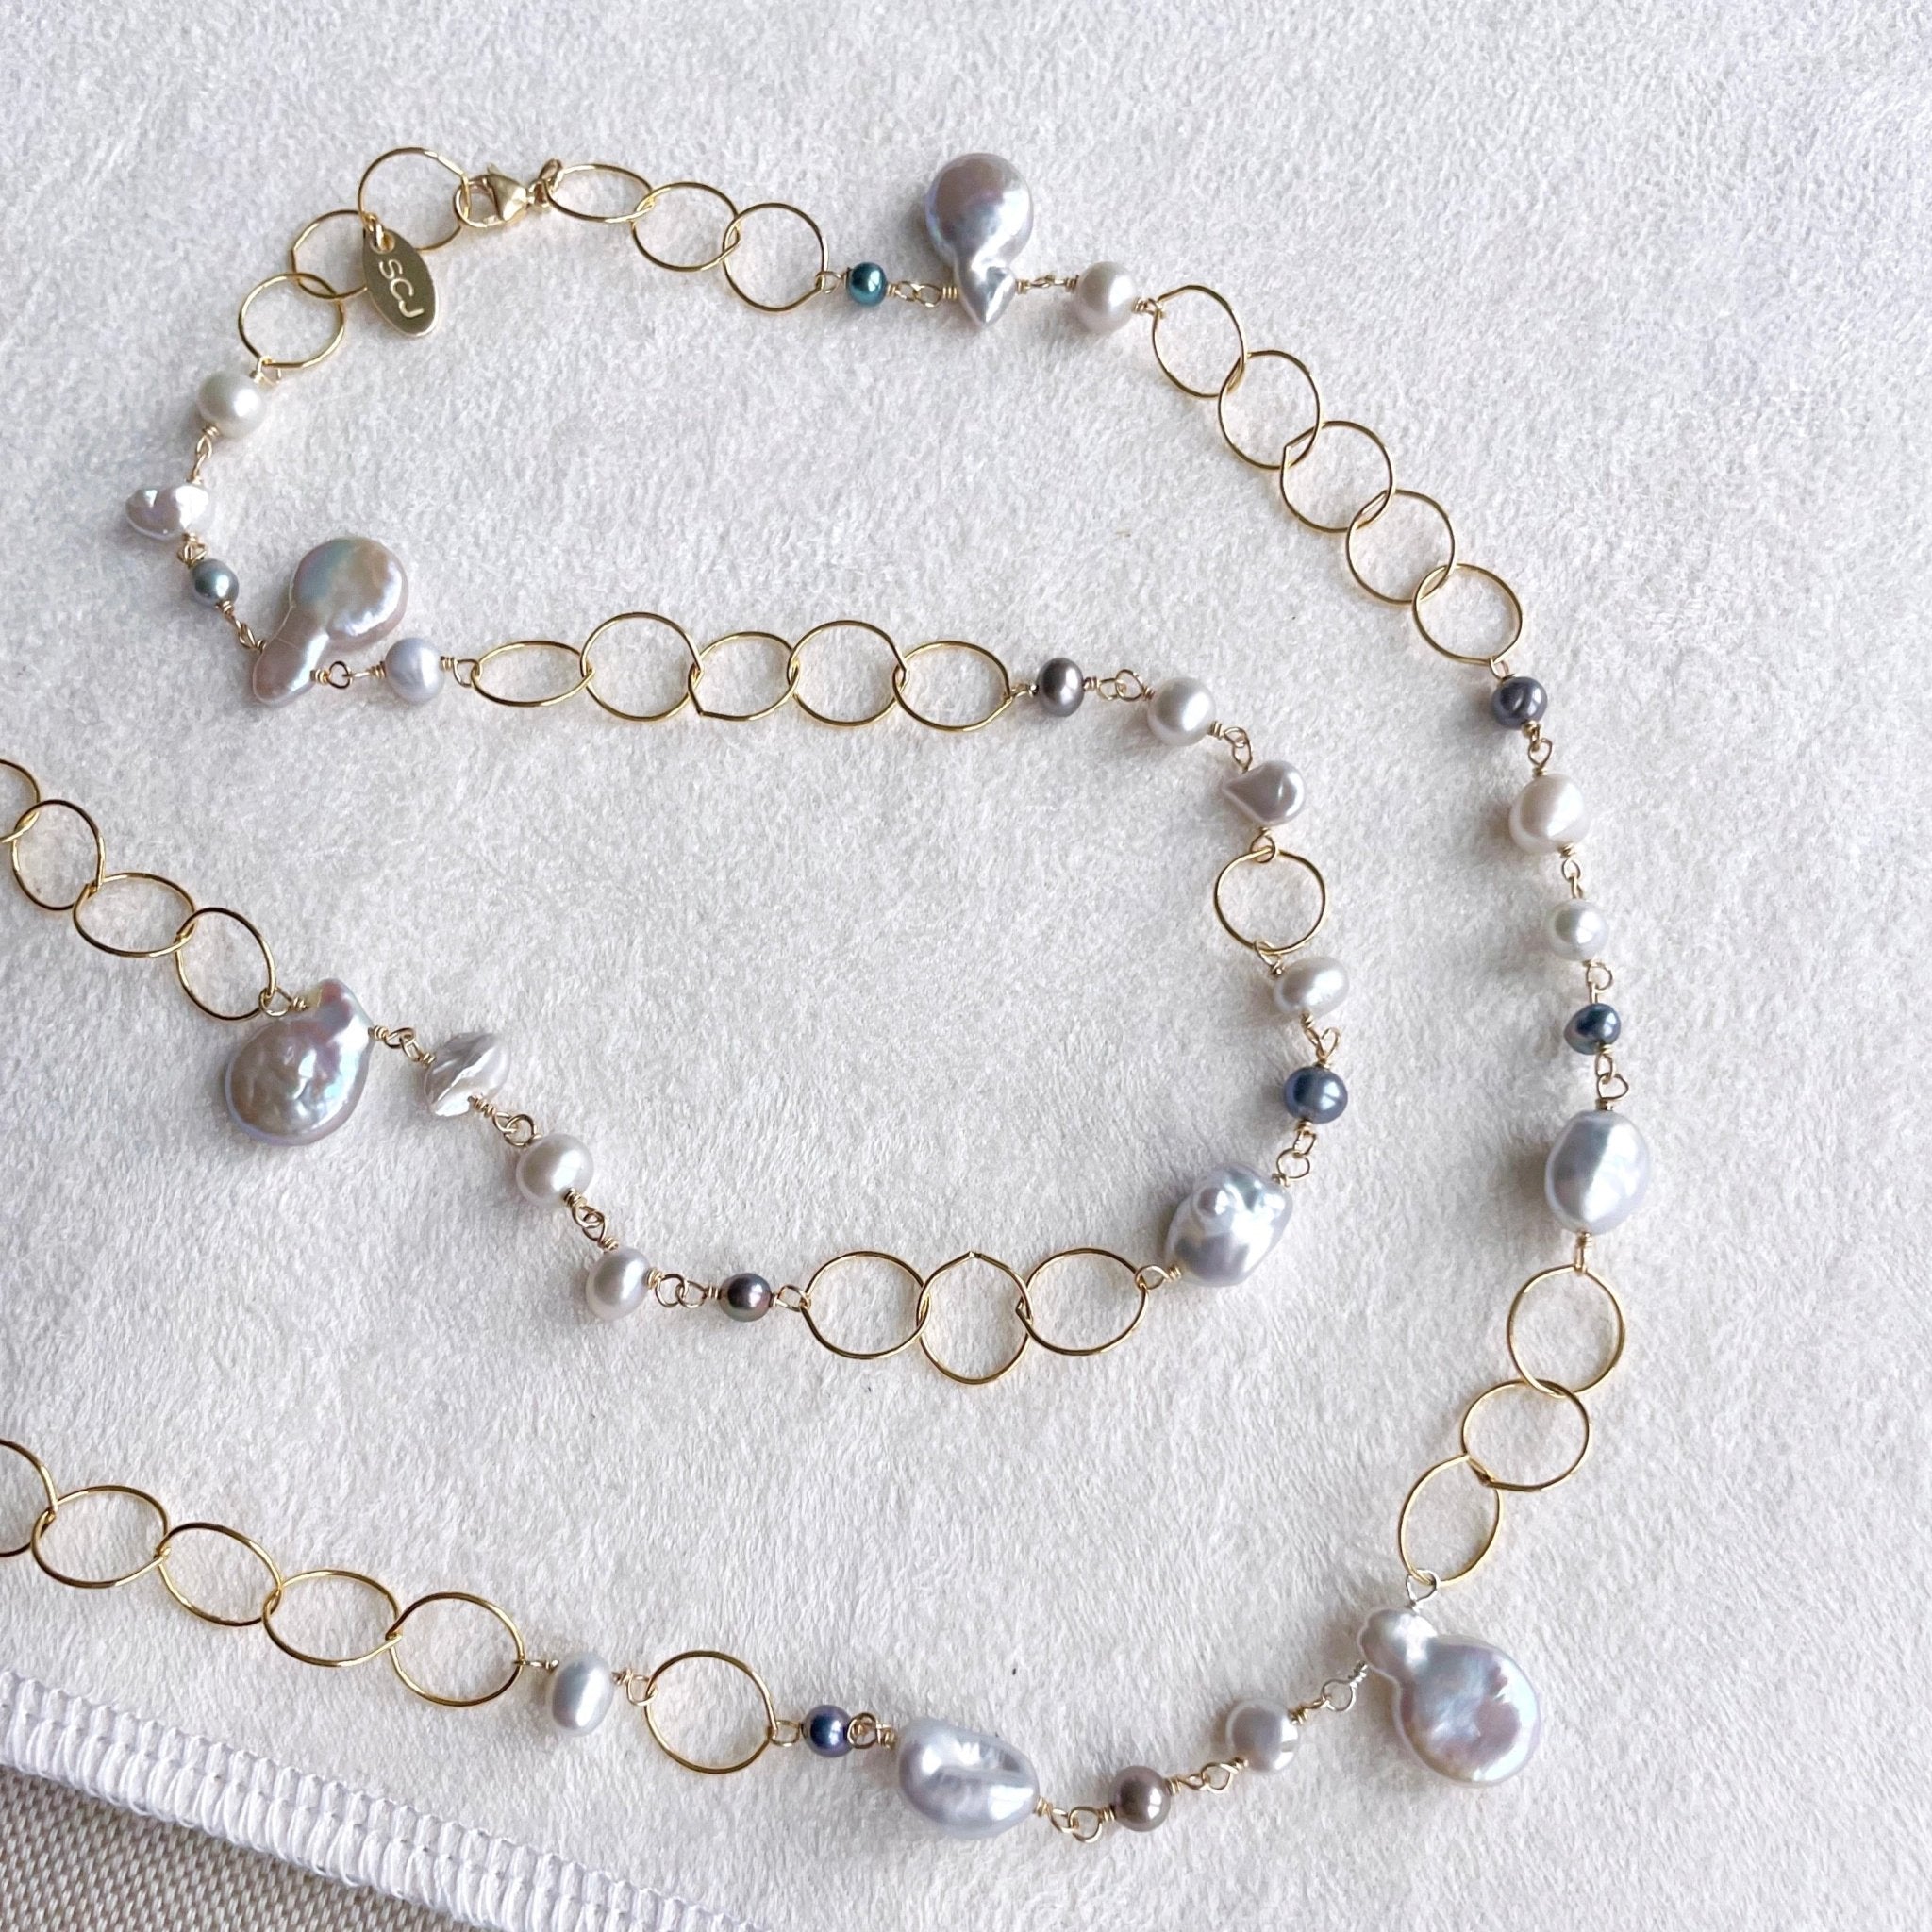 Gray Mist Necklace - Sarah Cornwell Jewelry